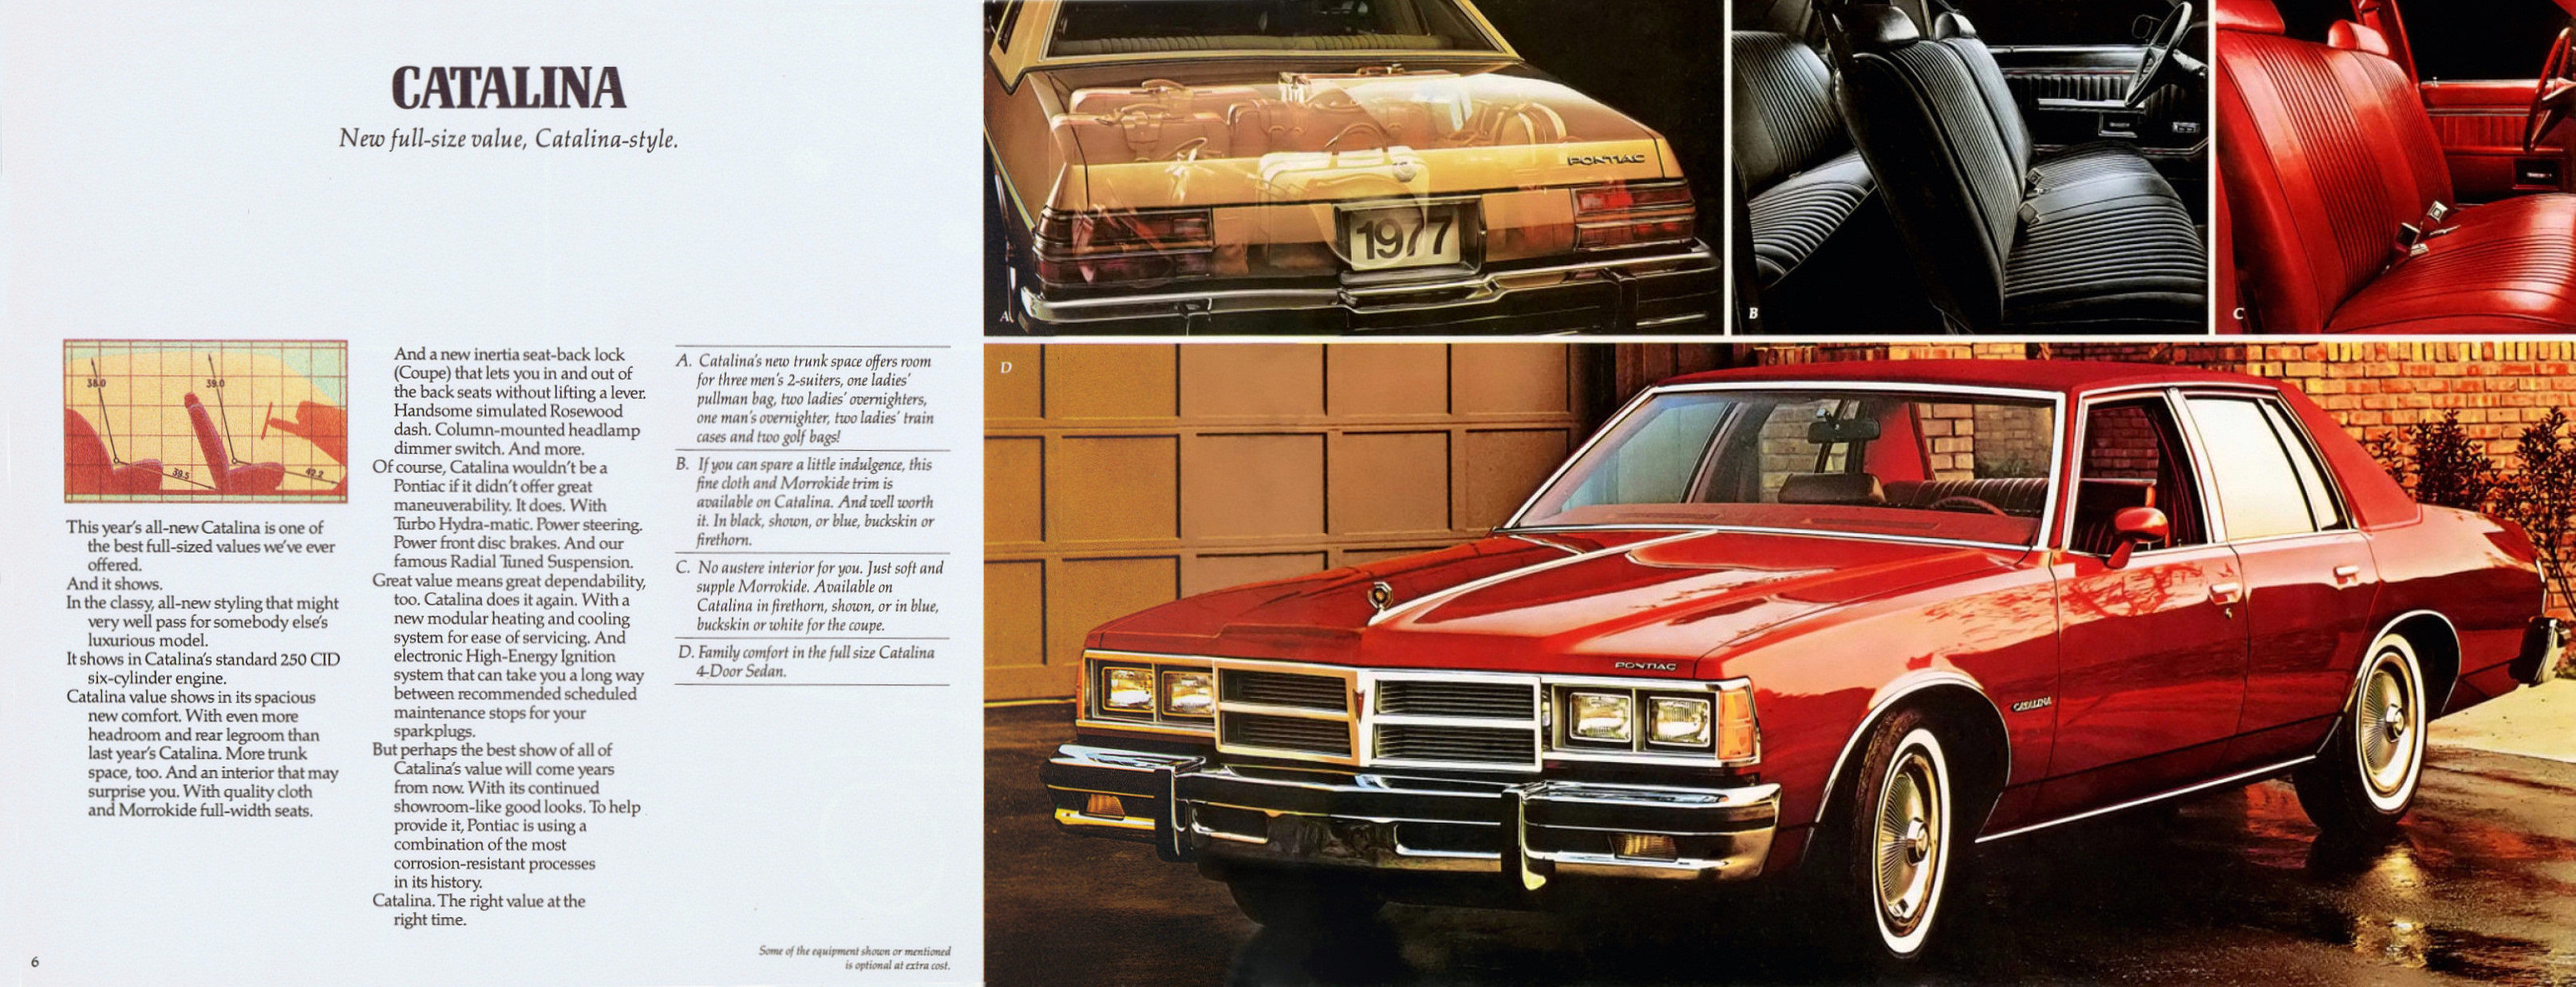 1977_Pontiac_Full_Size_Cdn-06-07